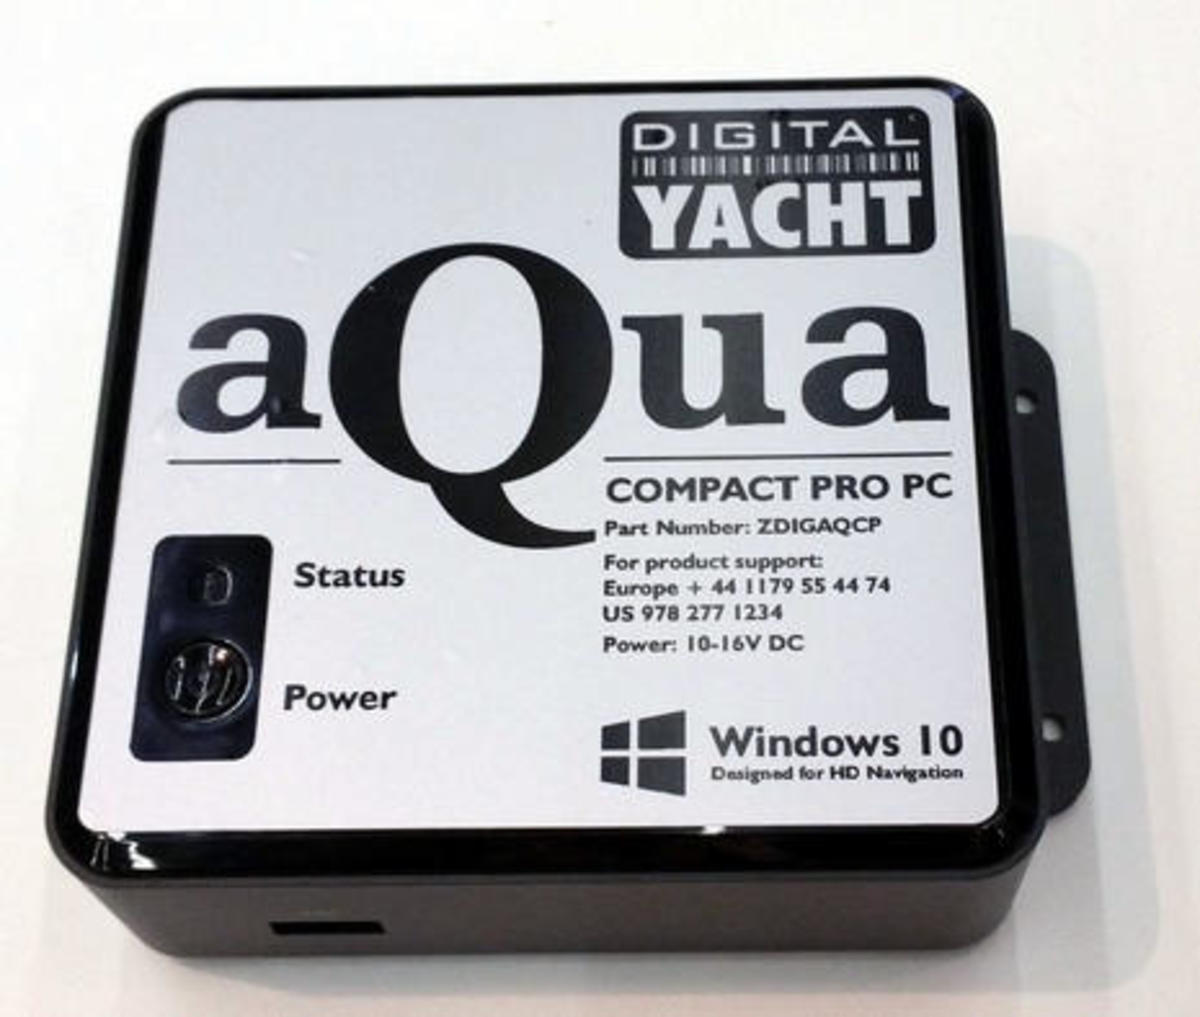 Digital_Yacht_aQua_Compact_Pro_PC_cPanbo.jpg